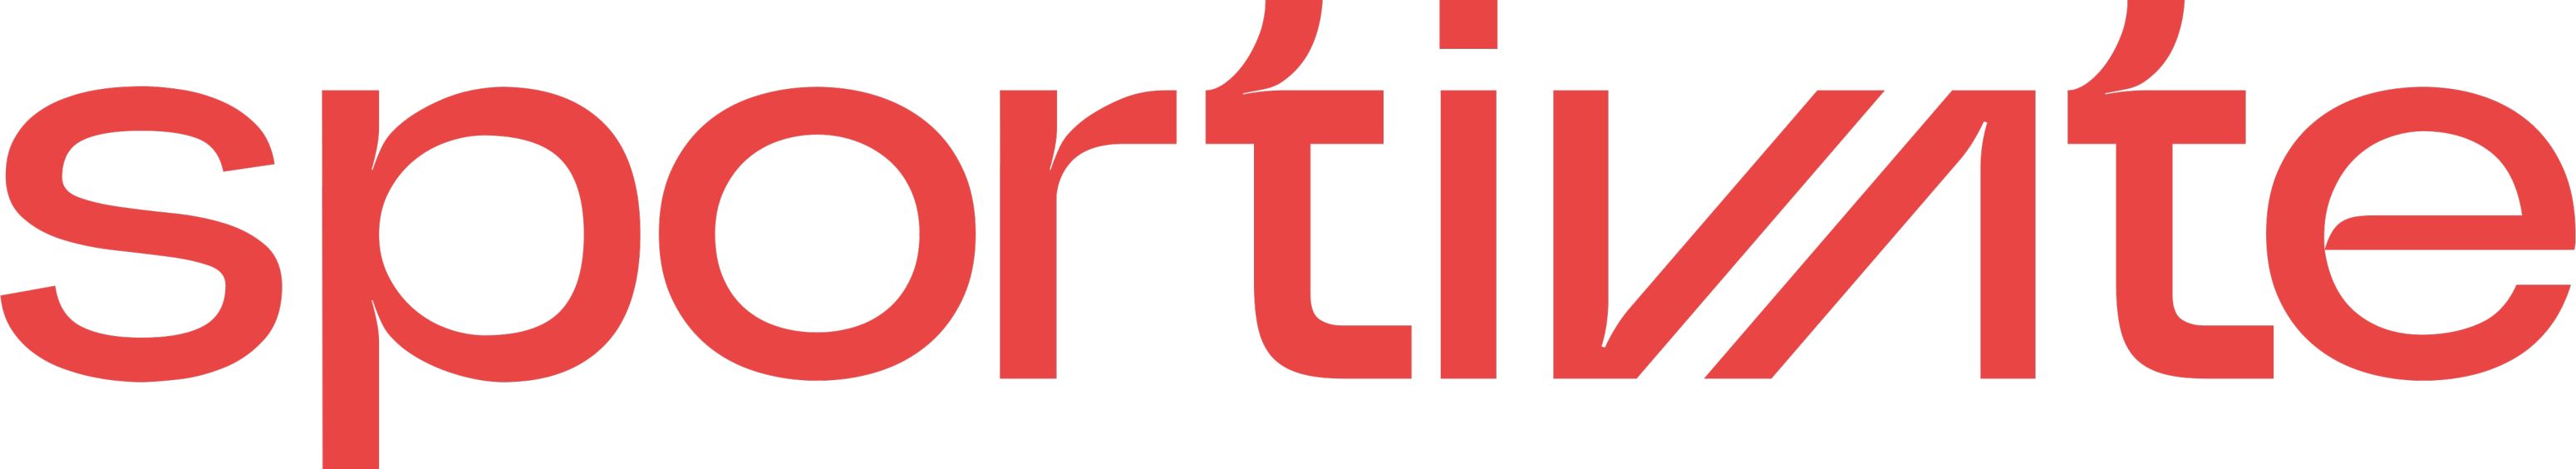 Logo 23 rood